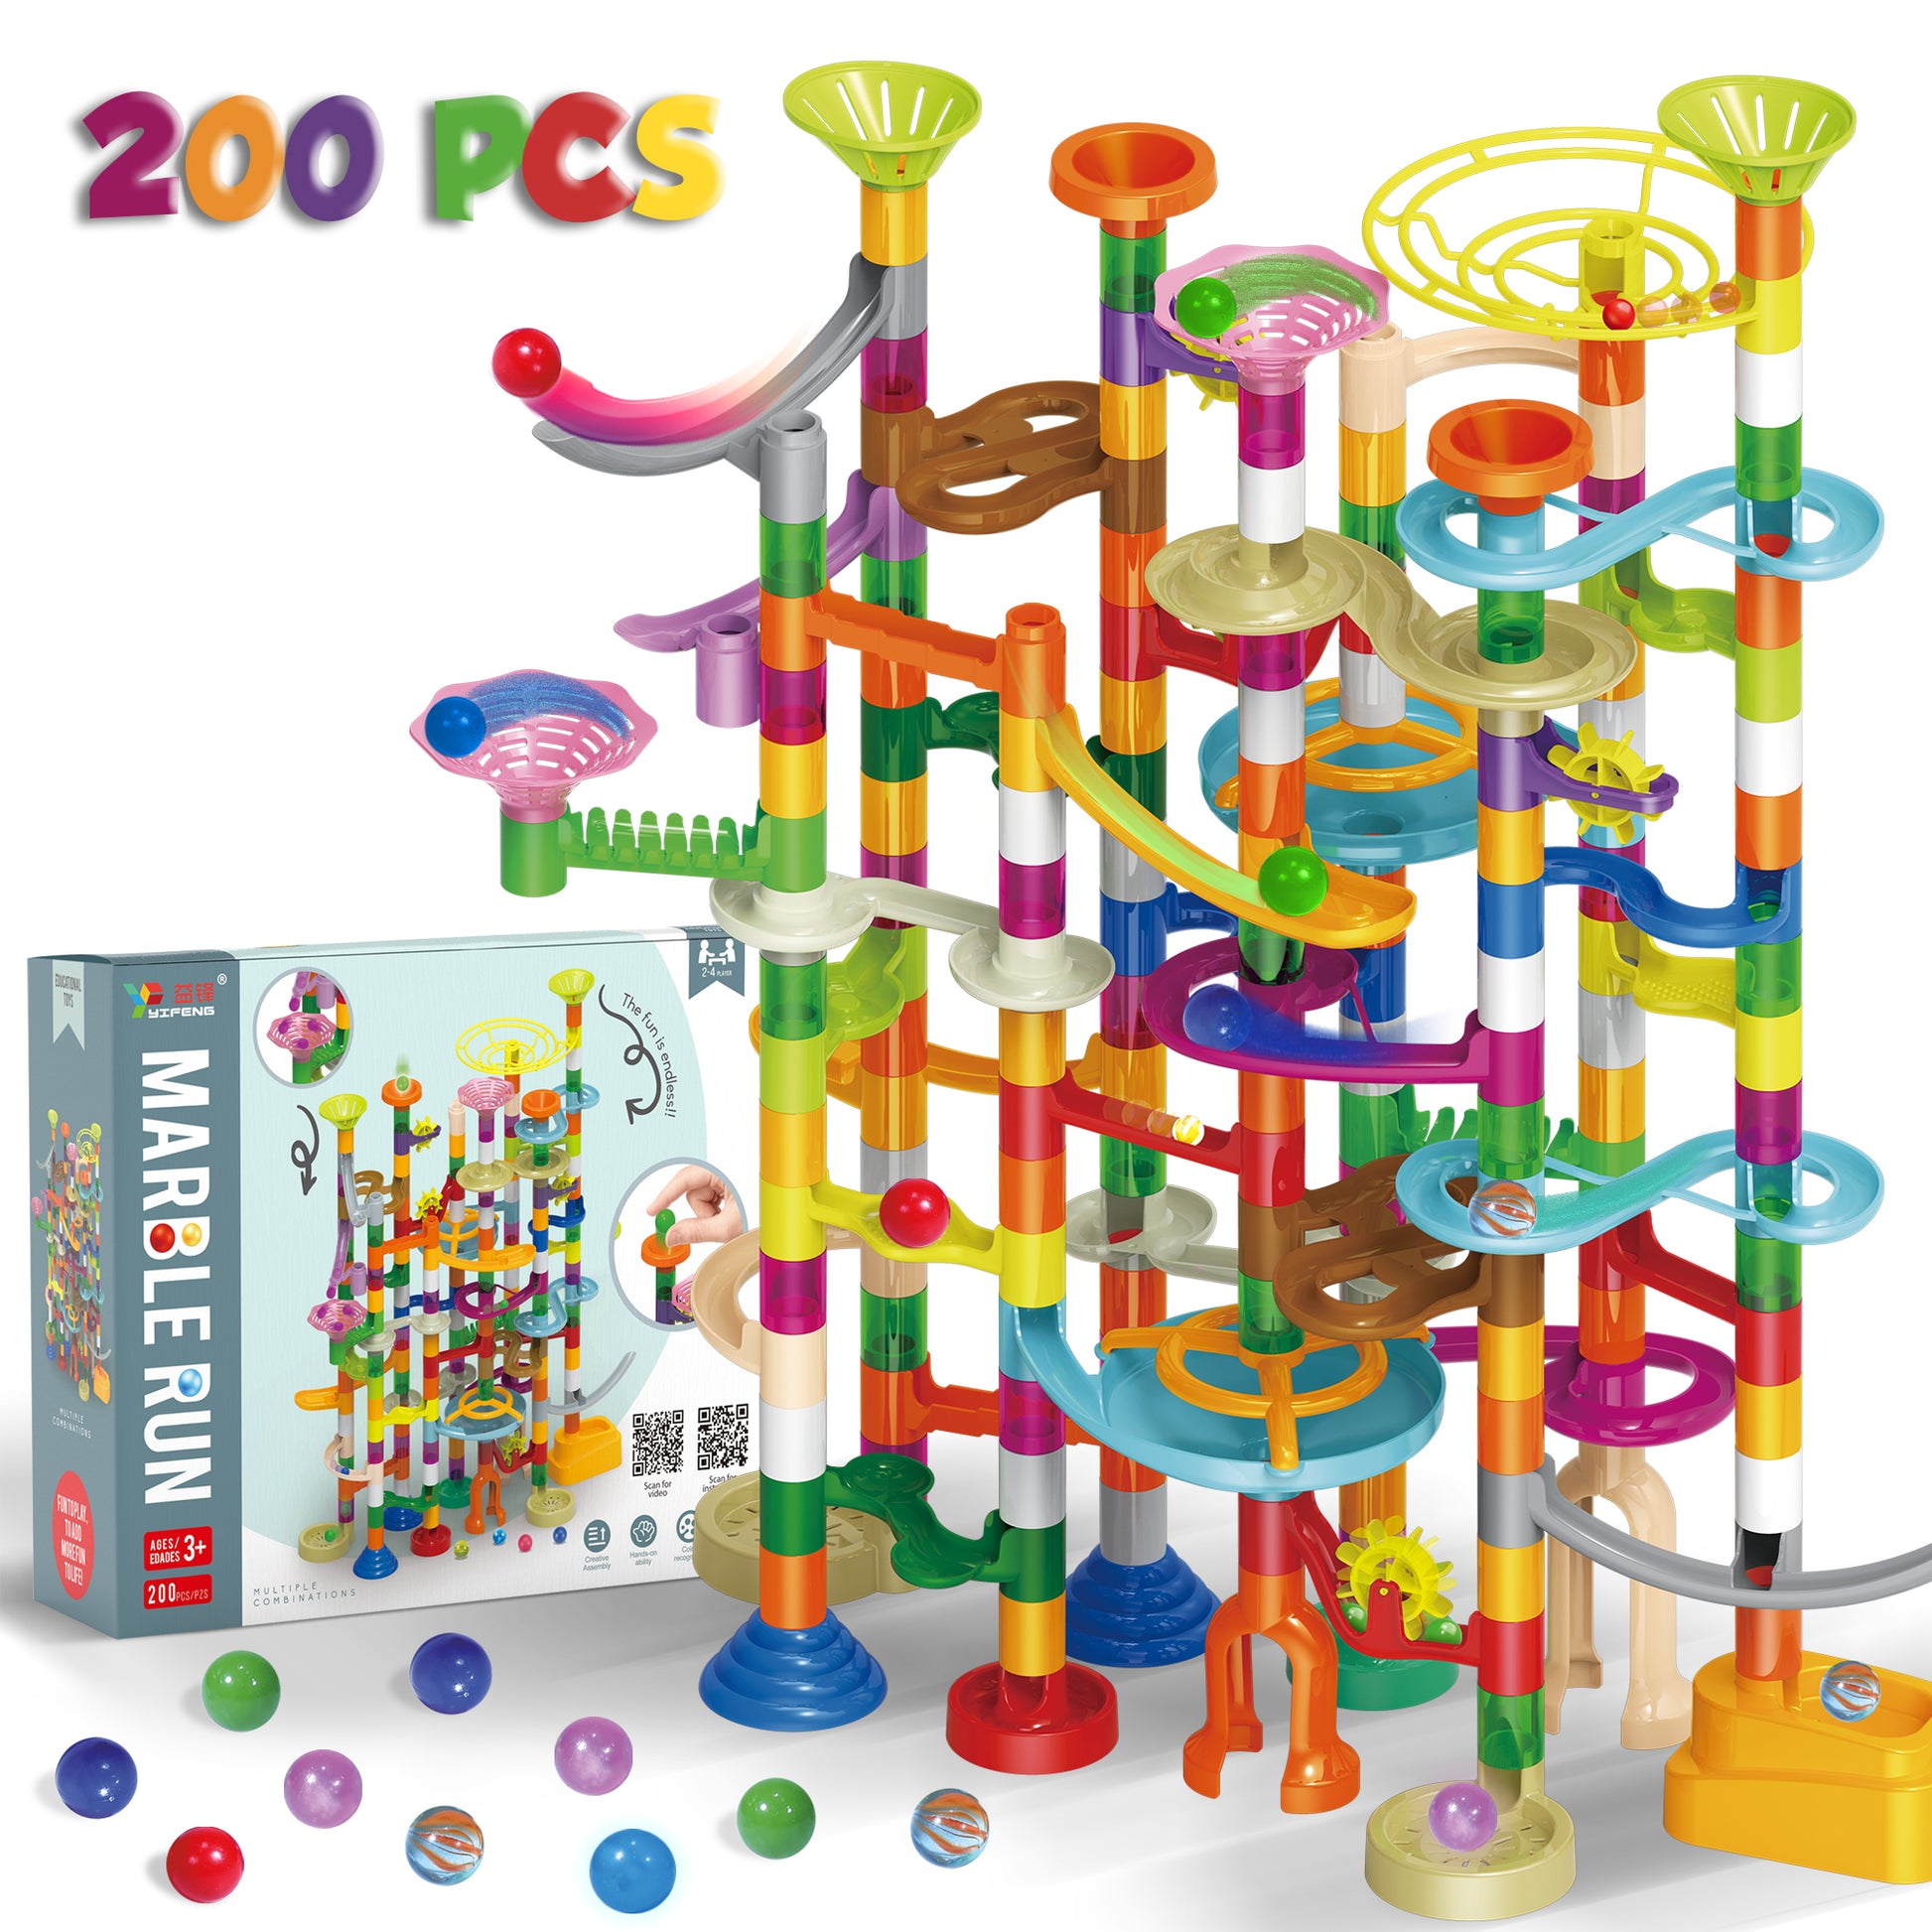 Marble Fun 200 pcs Toy Set